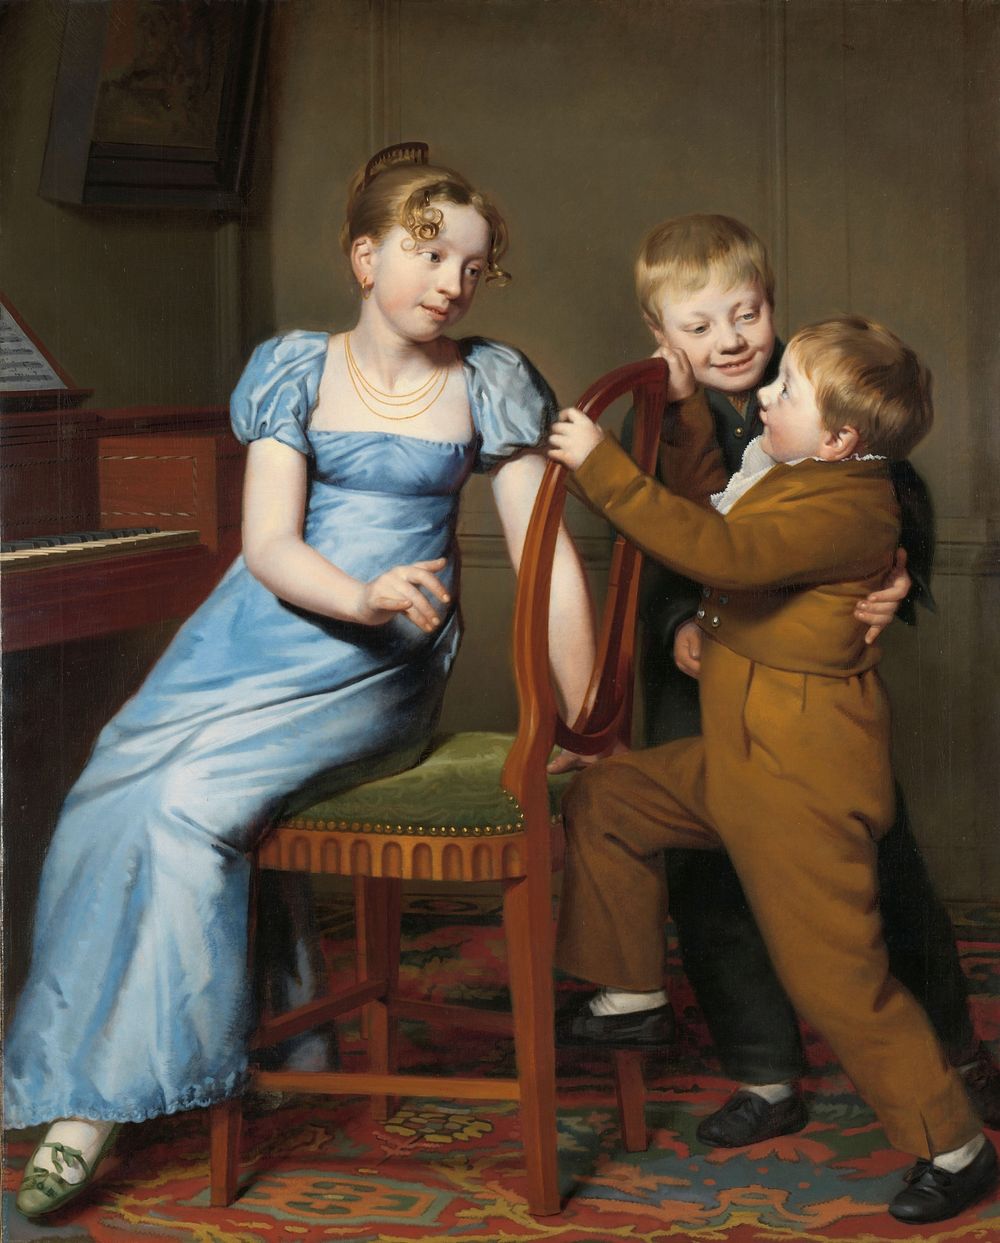 Piano Practice Interrupted (1813) by Willem Bartel van der Kooi